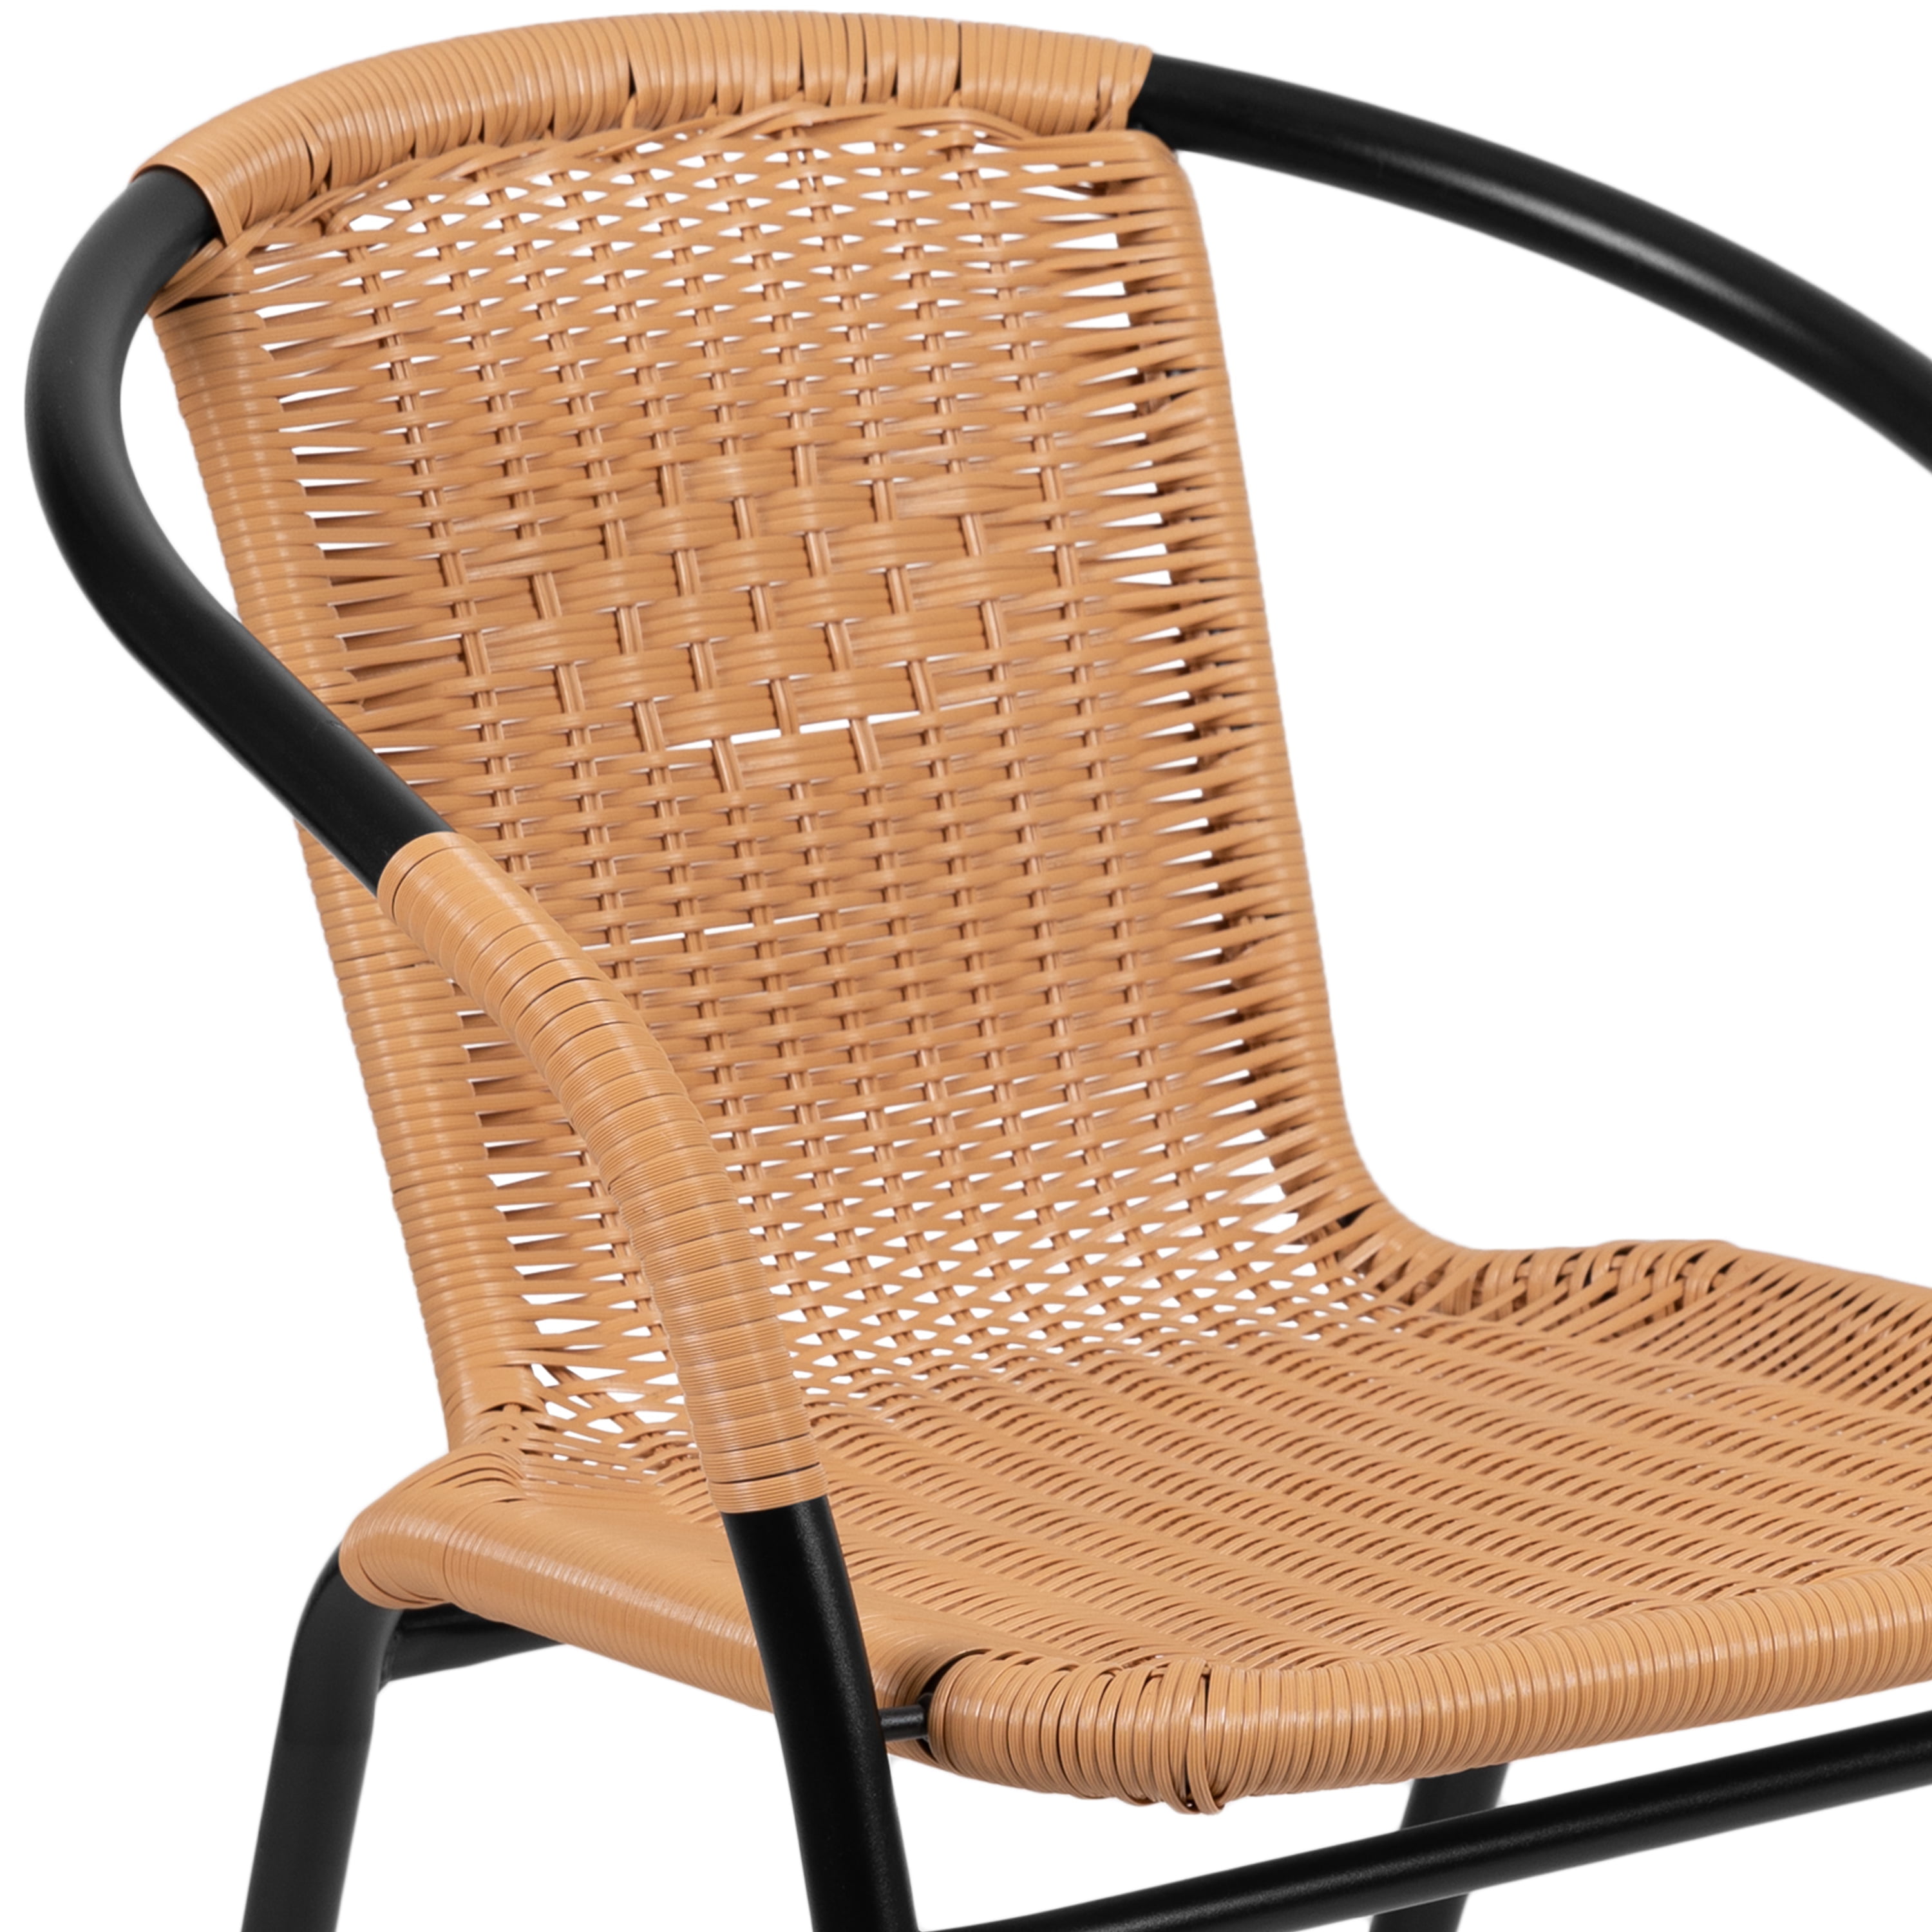 Flash Furniture Lila 2 Pack Black Rattan Indoor-Outdoor Restaurant Stack Chair